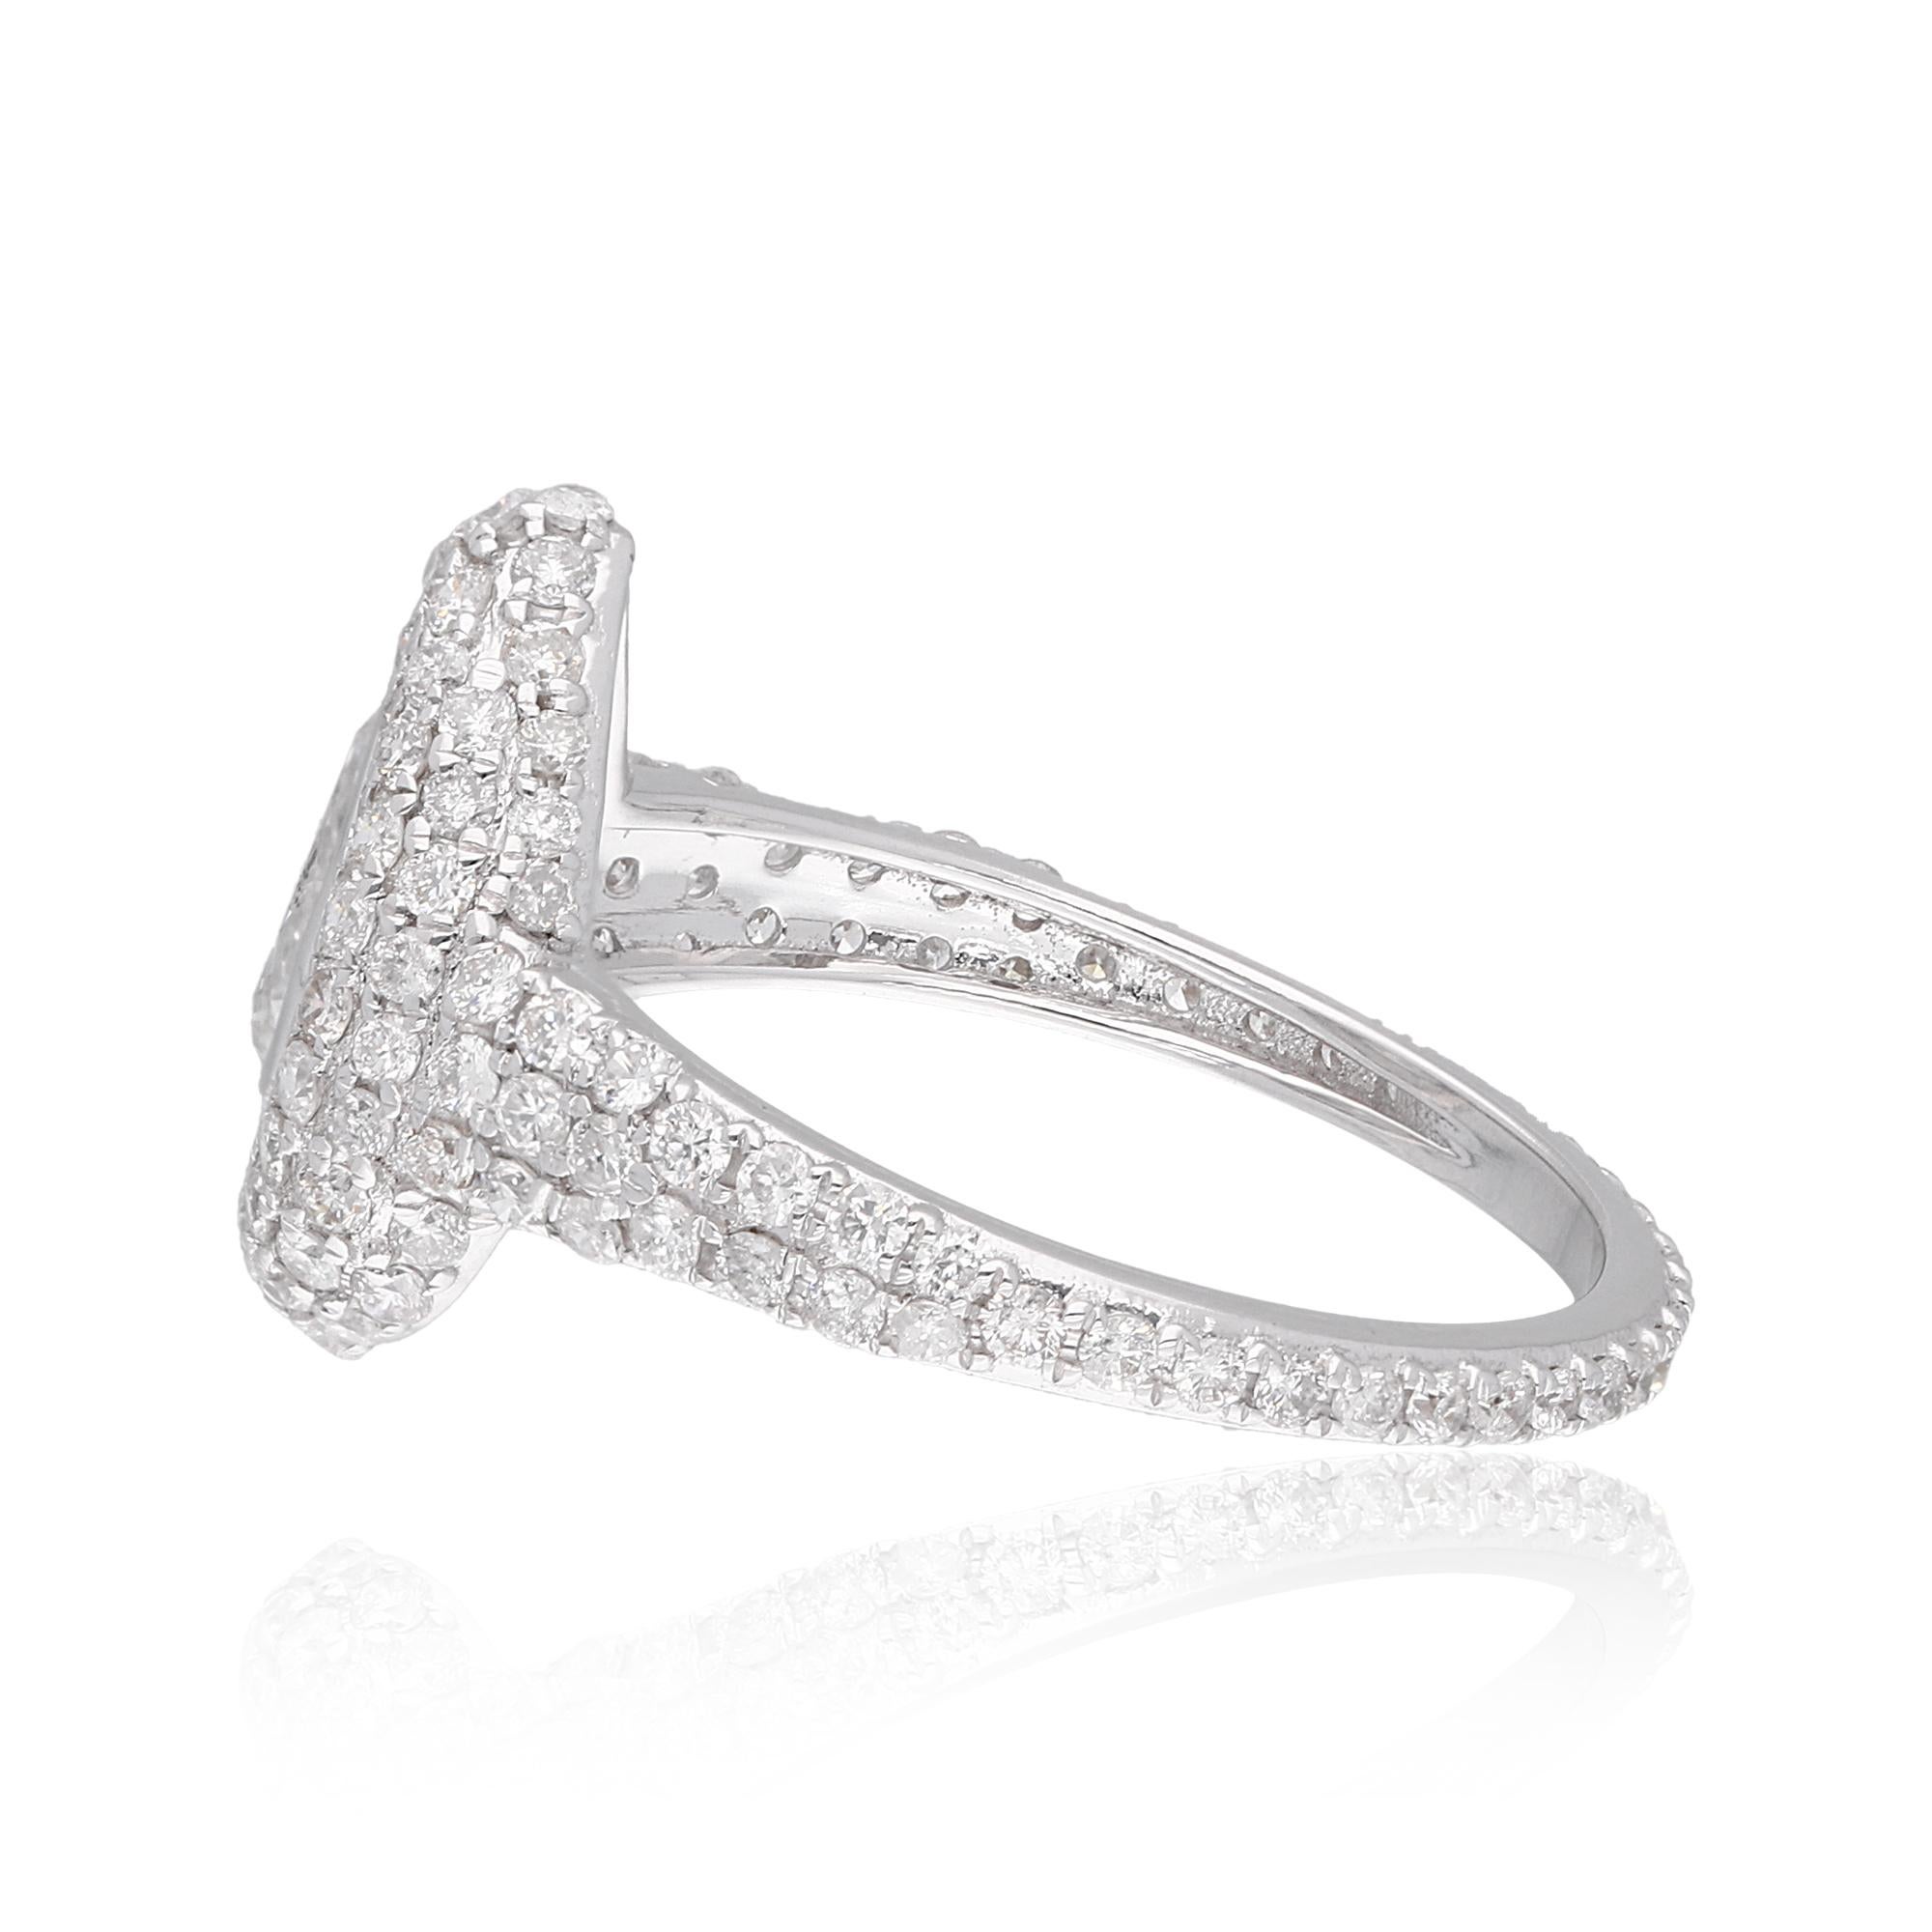 1.66 Carat Pear Diamond Studded Ring 18 Karat White Gold Handmade Fine Jewelry For Sale 1